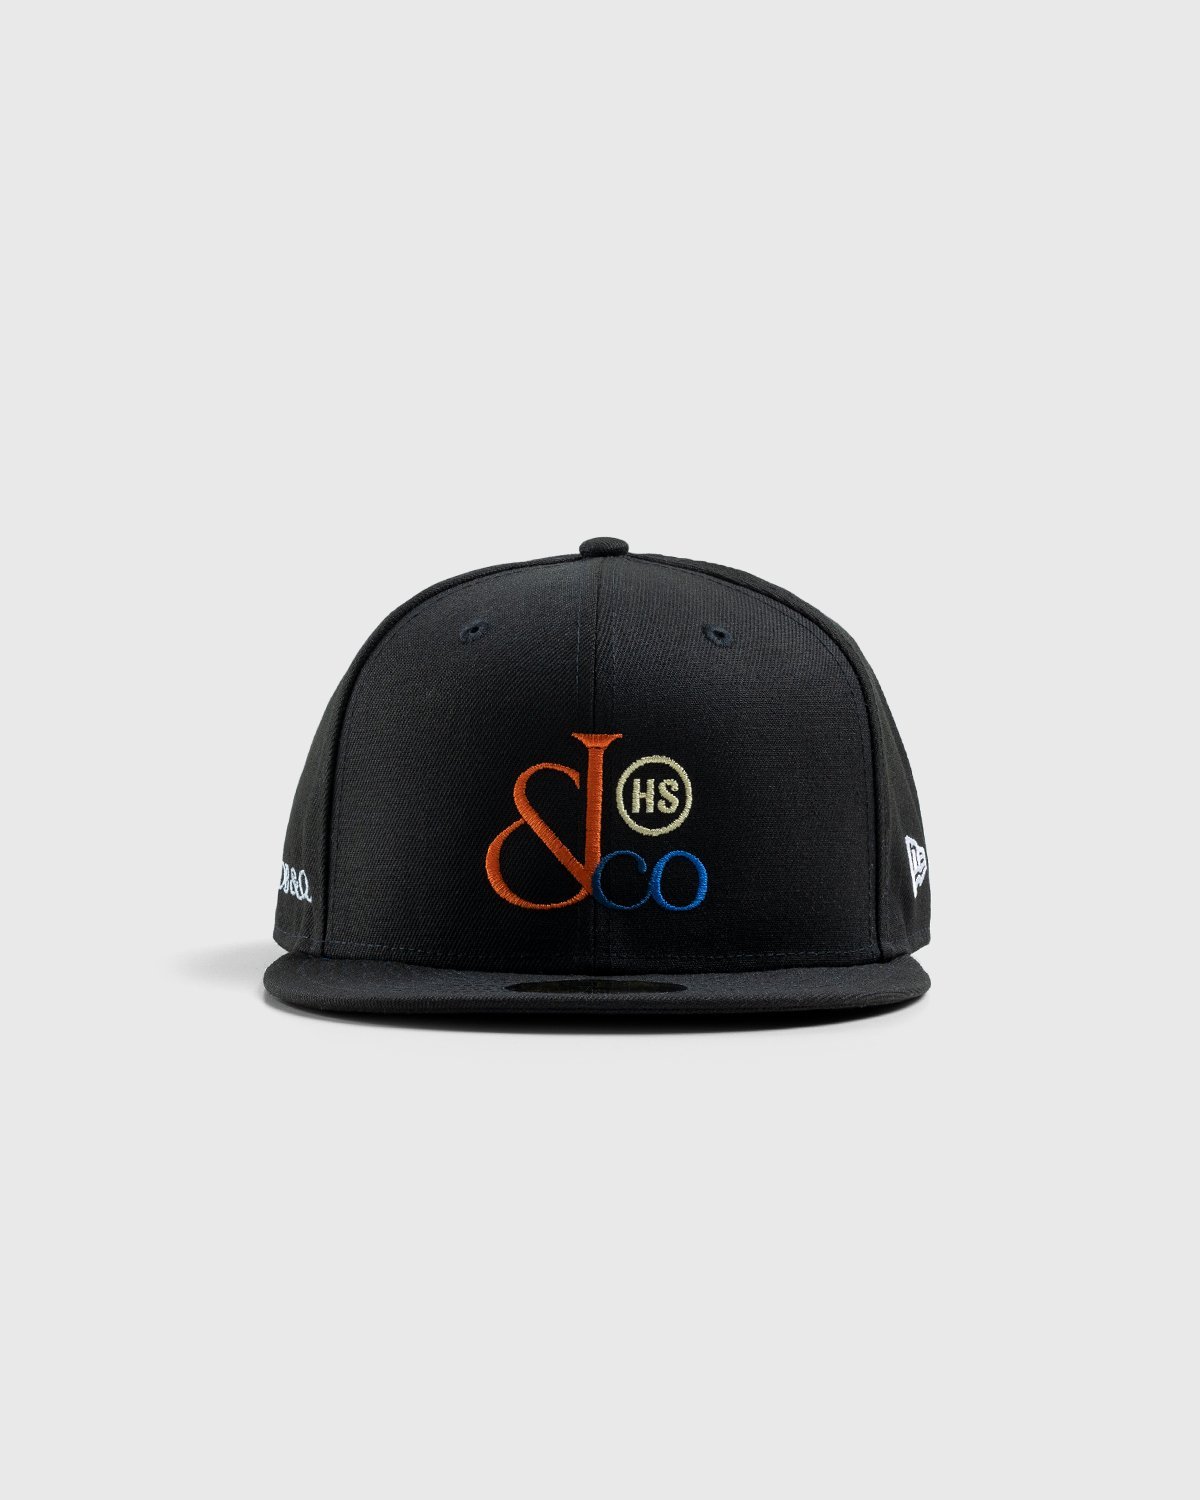 Jacob & Co. x Highsnobiety - Logo Cap Black - Accessories - Black - Image 2